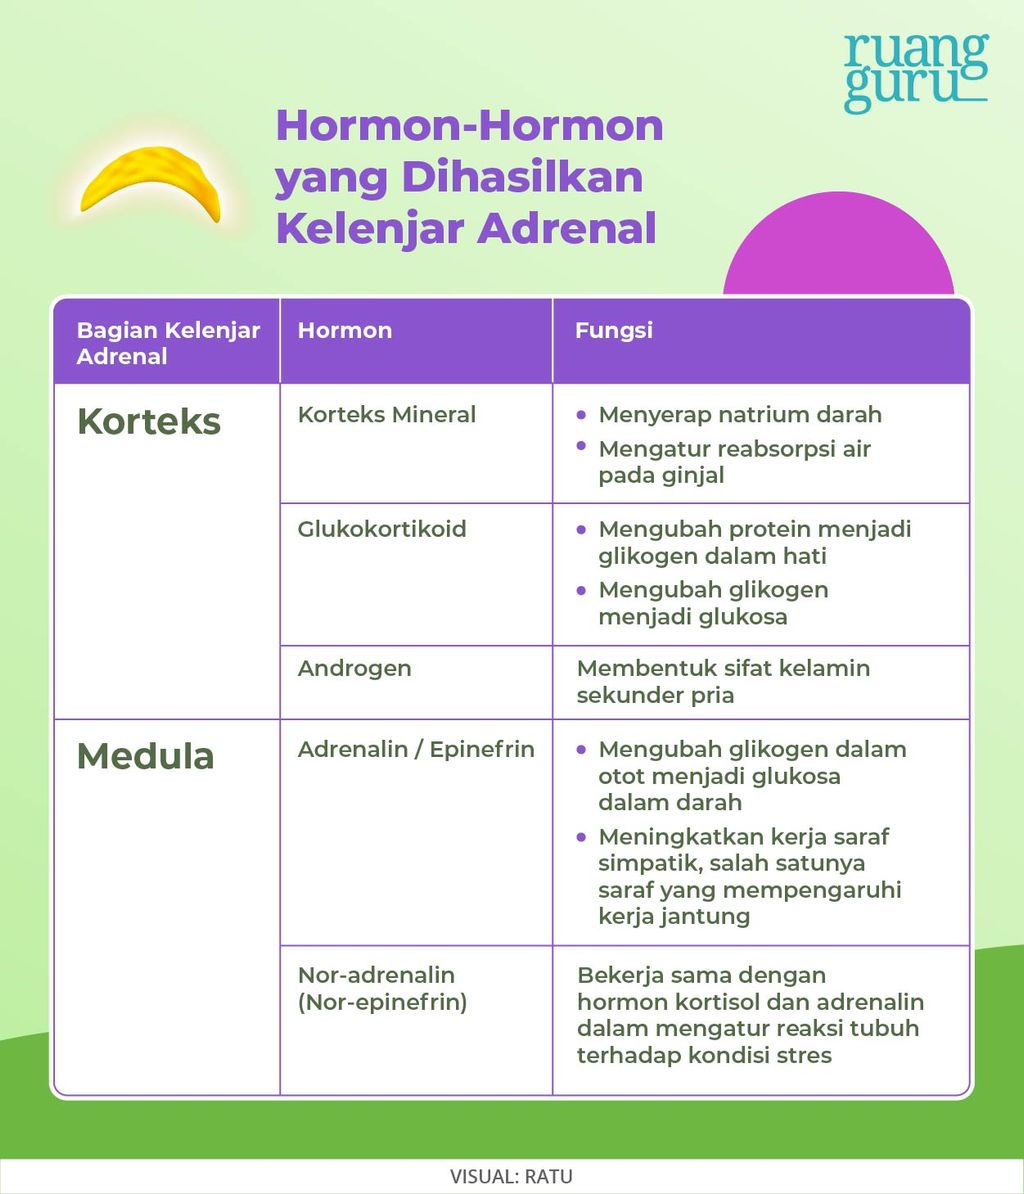 Hormon-Hormon Kelenjar Adrenal